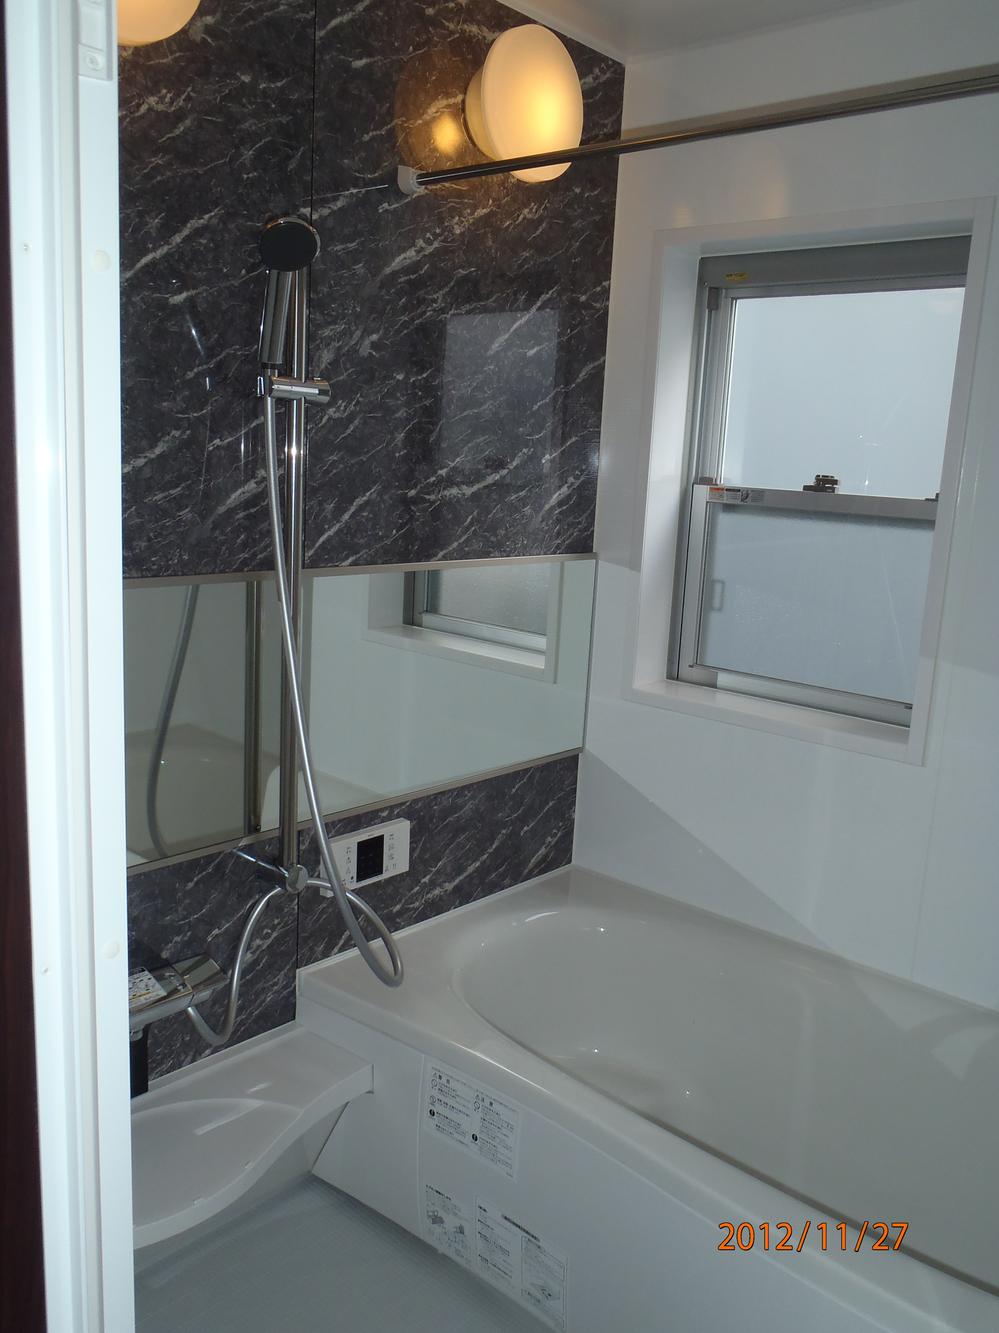 Building plan example (introspection photo). Second floor bathroom same specifications